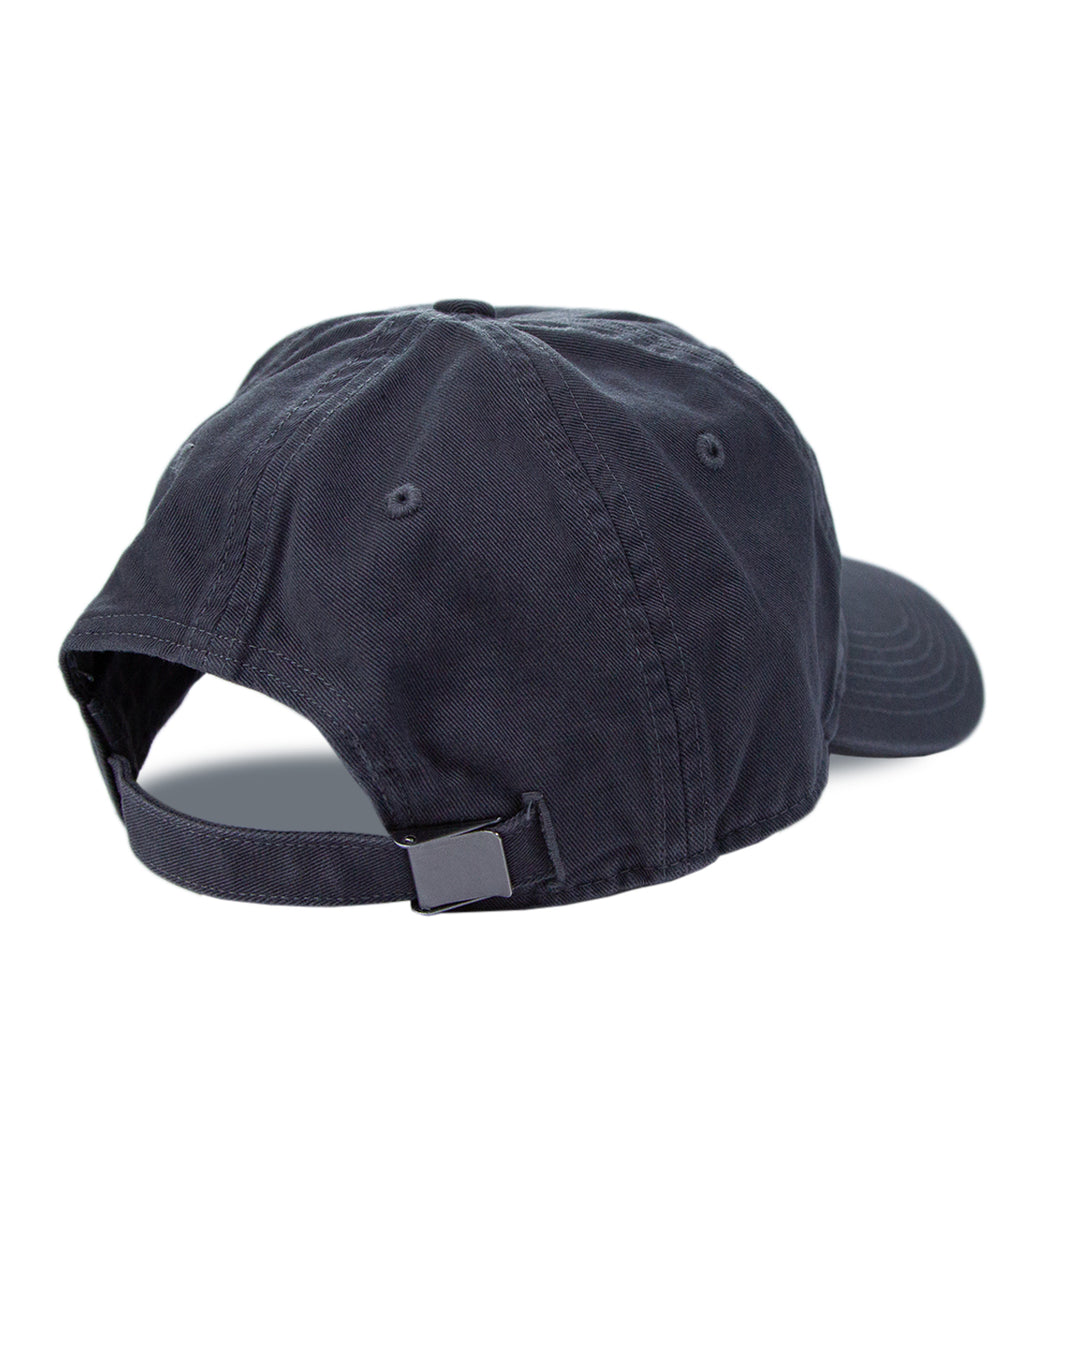 MuskOx Logo Hat in Grey Heavyweight Chino Cotton